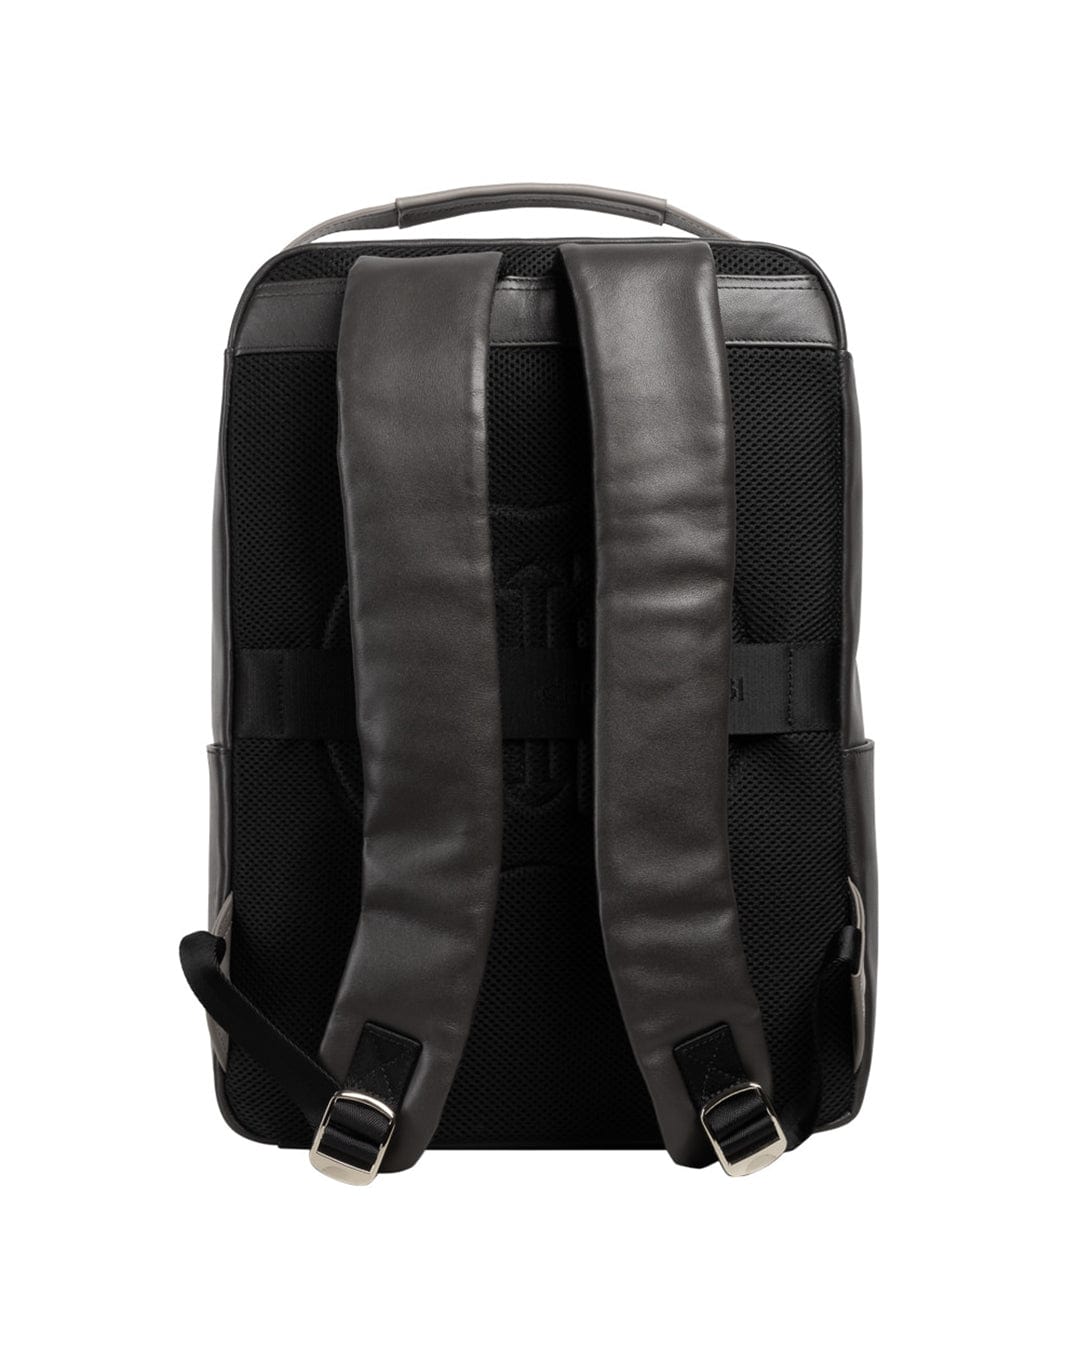 Cerruti Bags ONE SIZE Cerruti I88I Black Colton Backpack